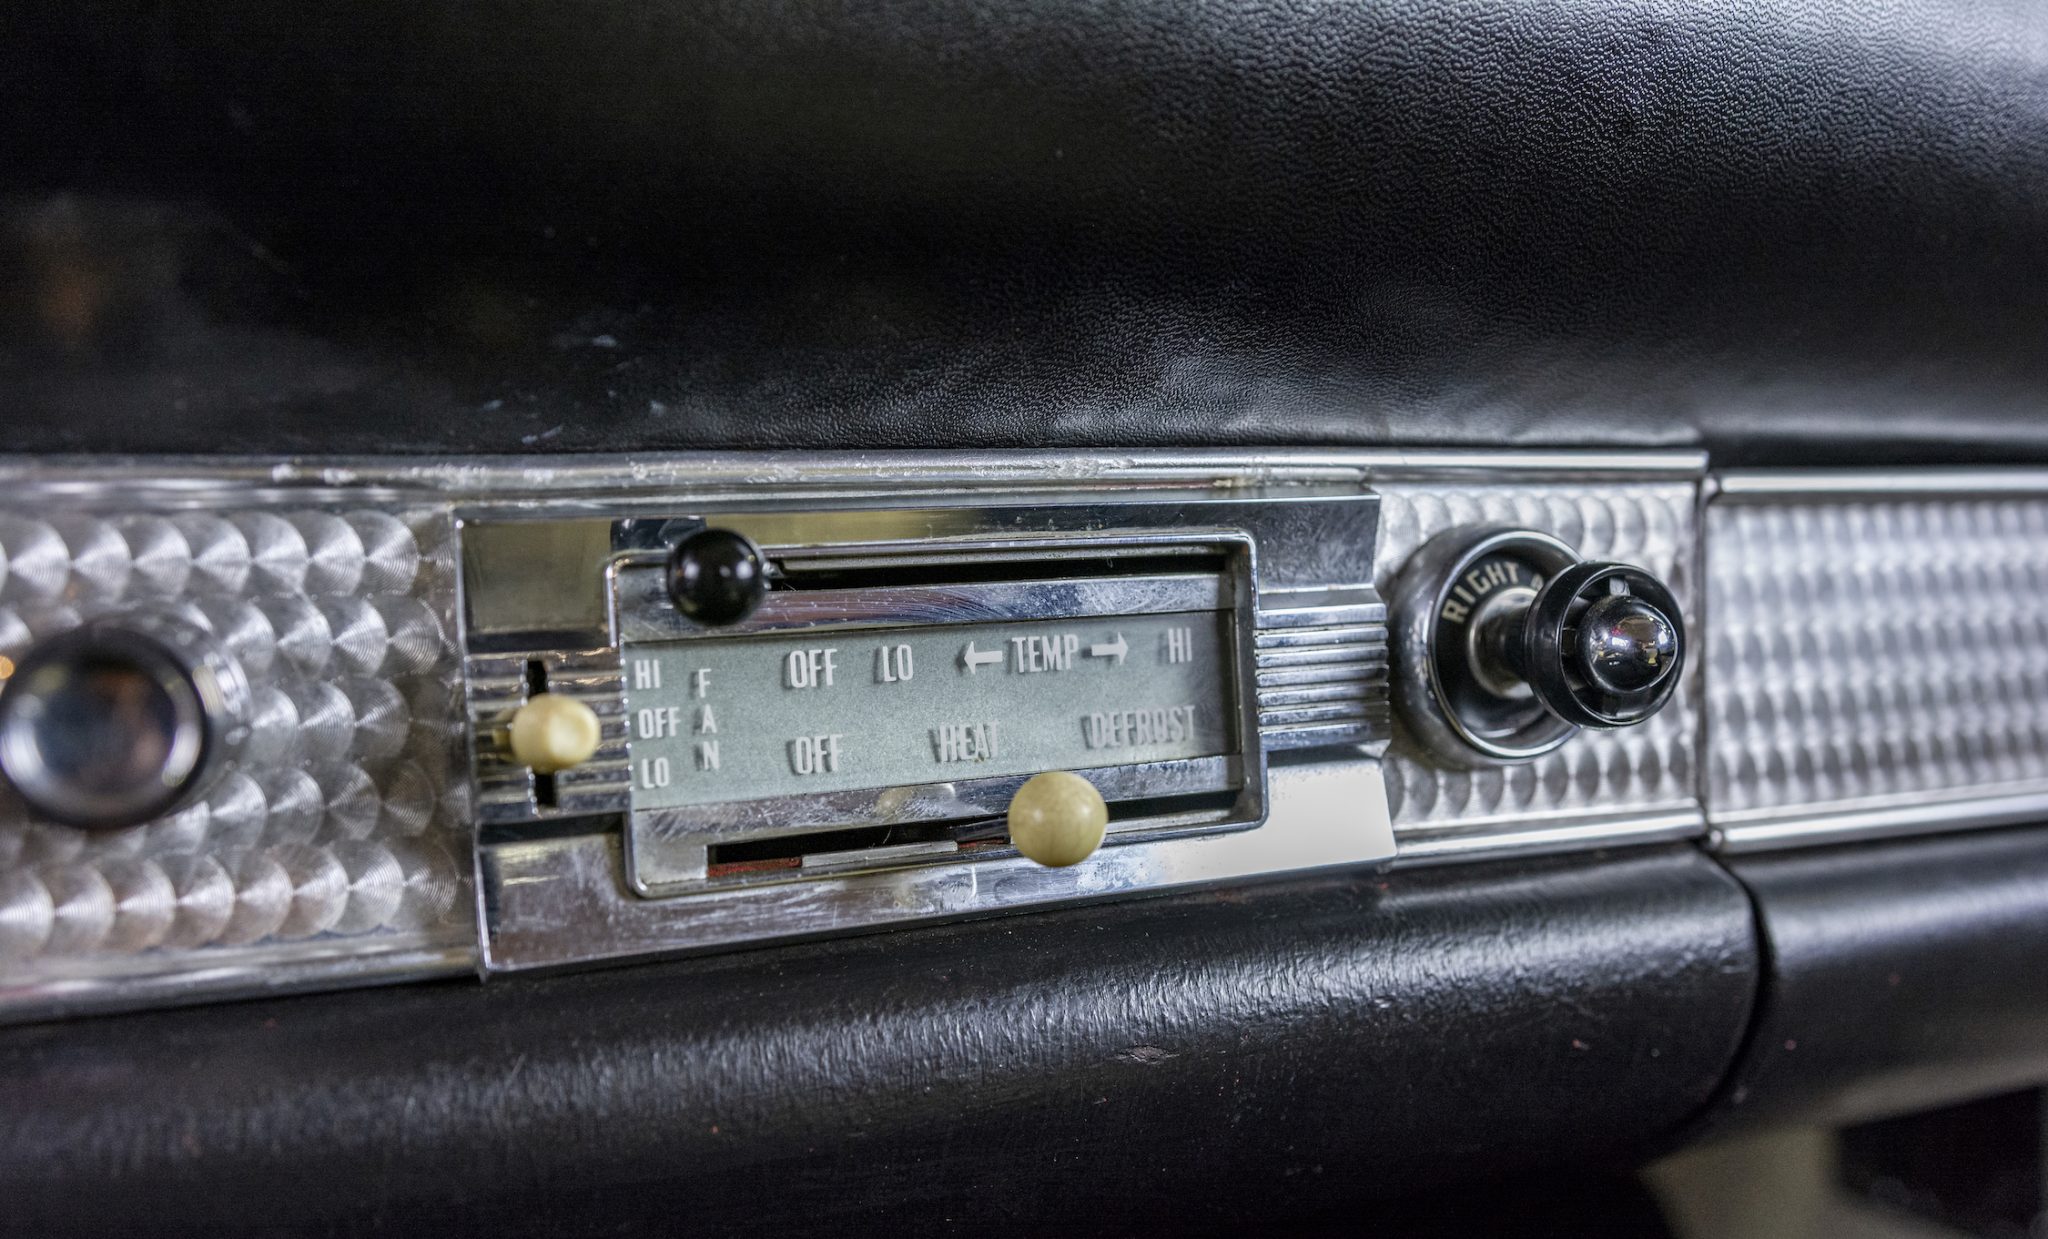 1956 Ford Thunderbird Radio